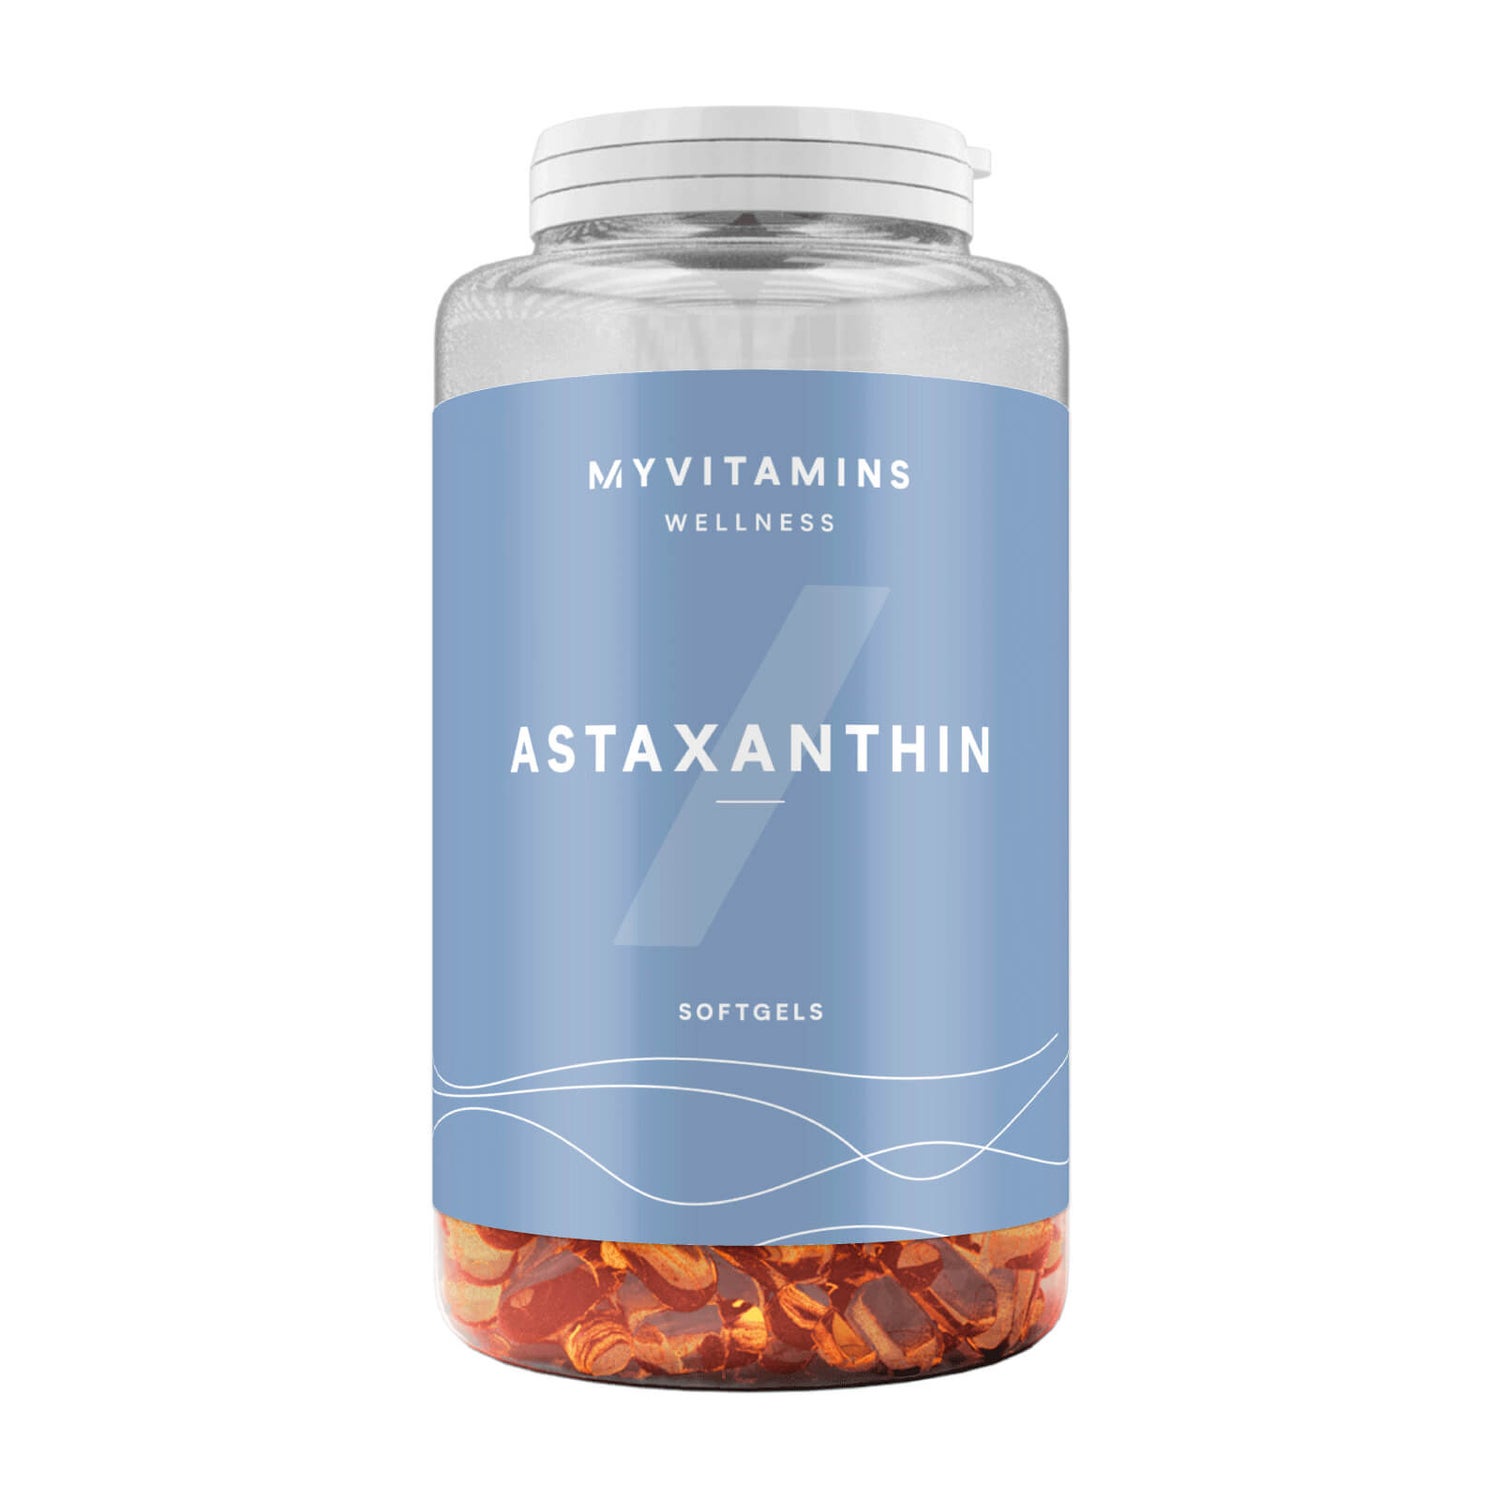 Astaxanthine softgels